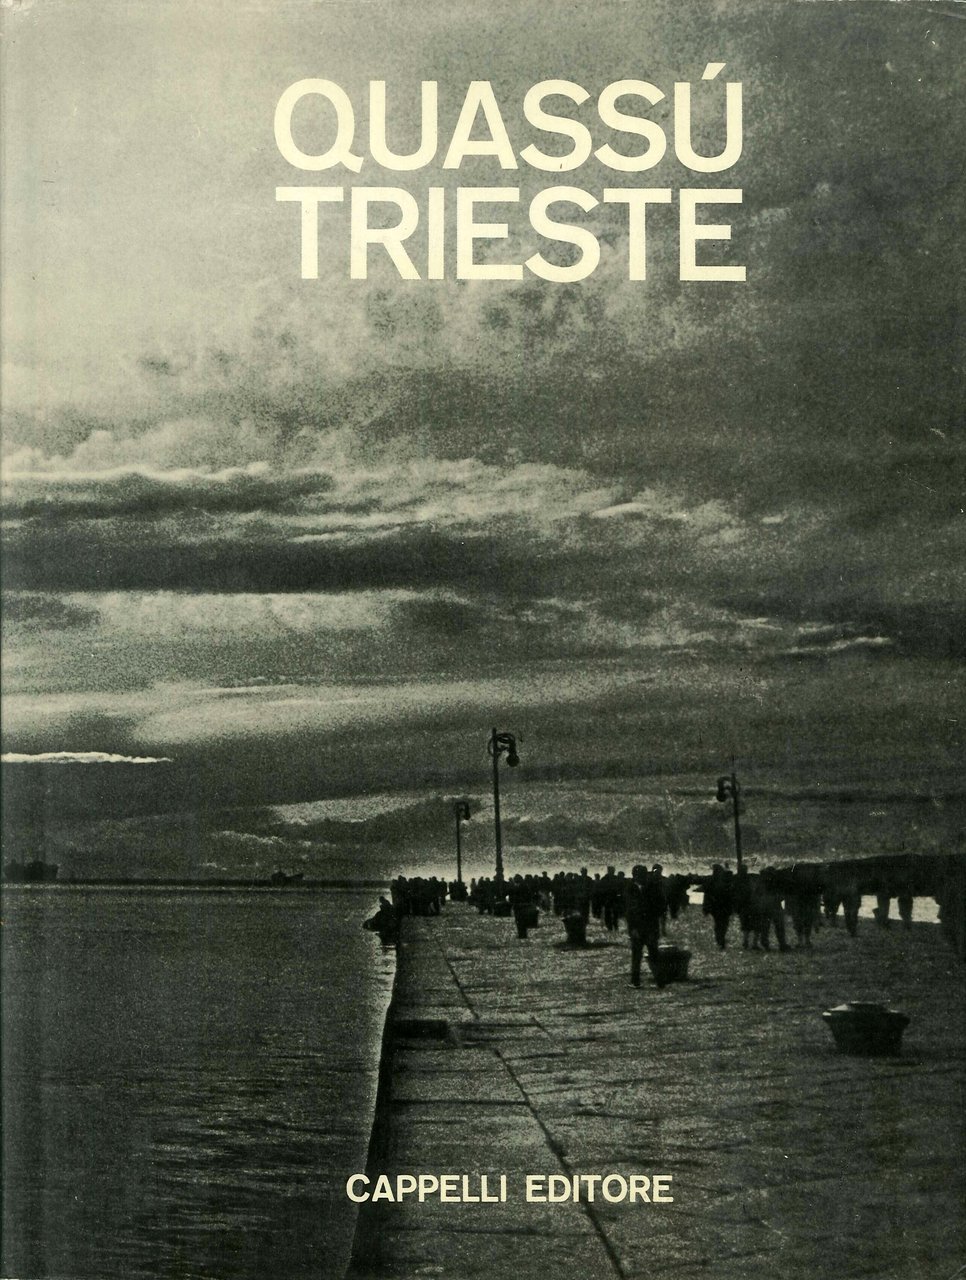 Quassu Trieste, Bologna, Cappelli Editore, 1968